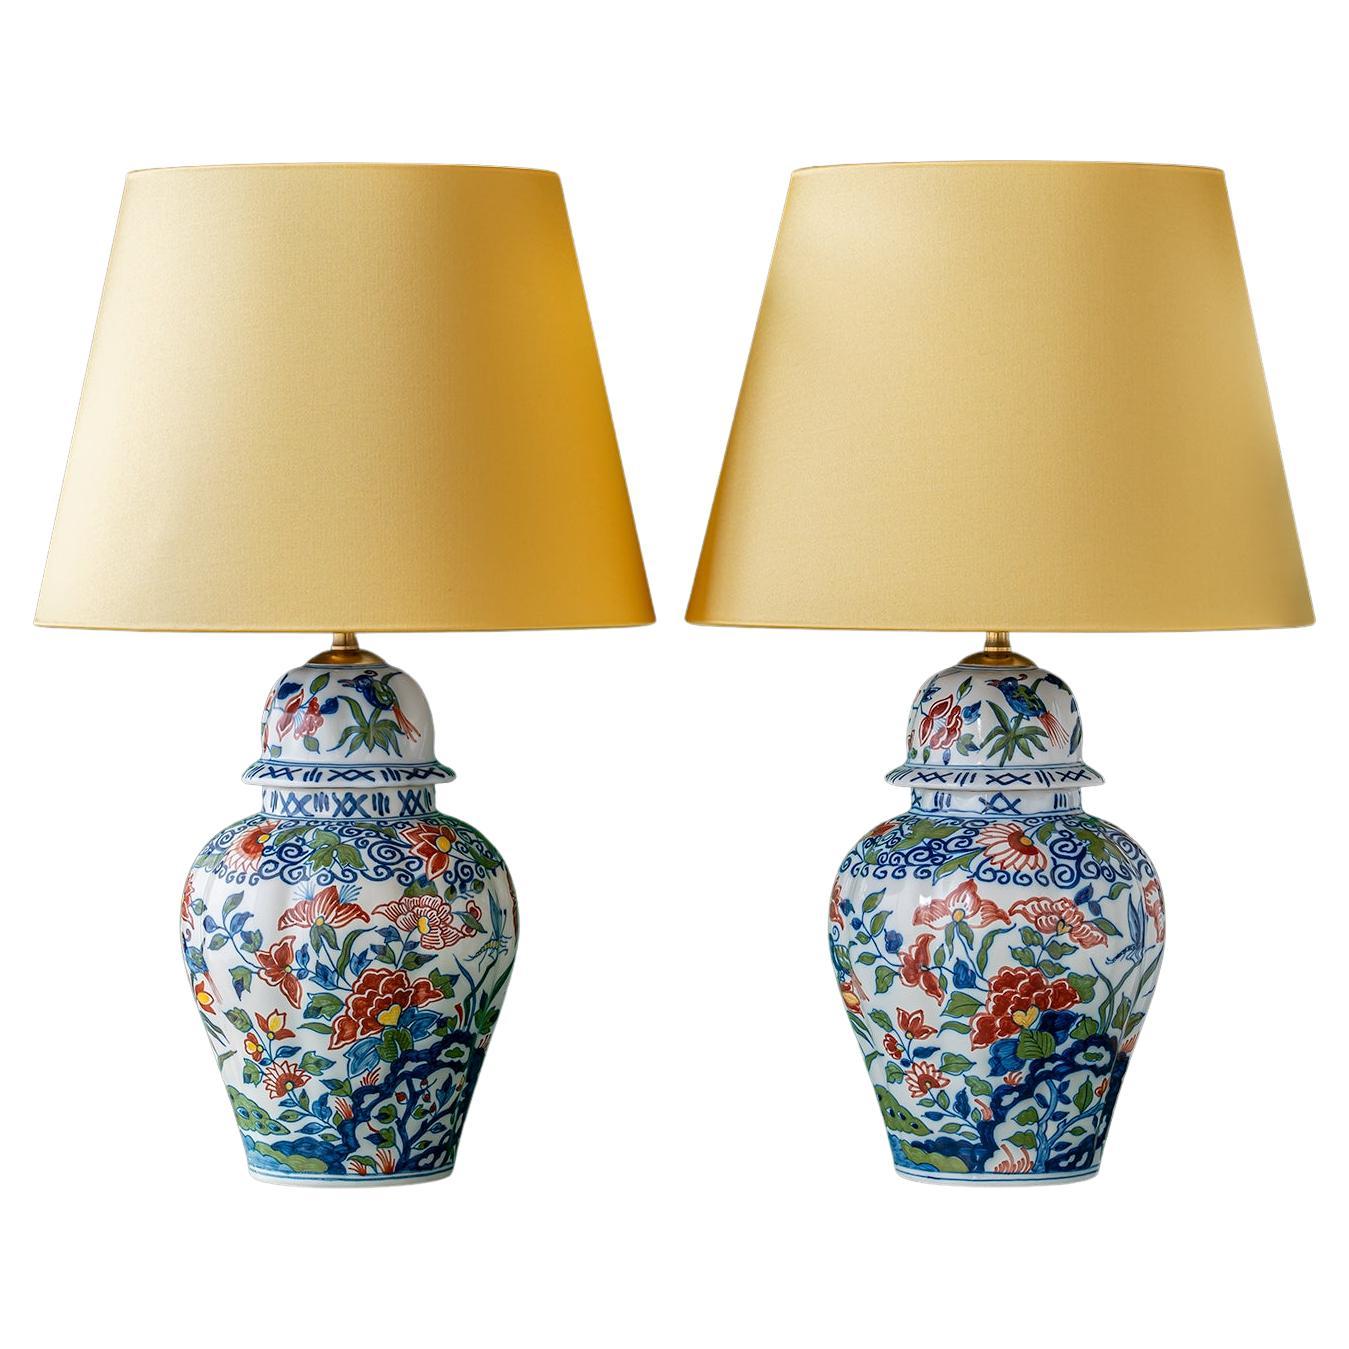 Royal Tichelaar Makkum Delft Table Lamps, Hand-Painted For Sale